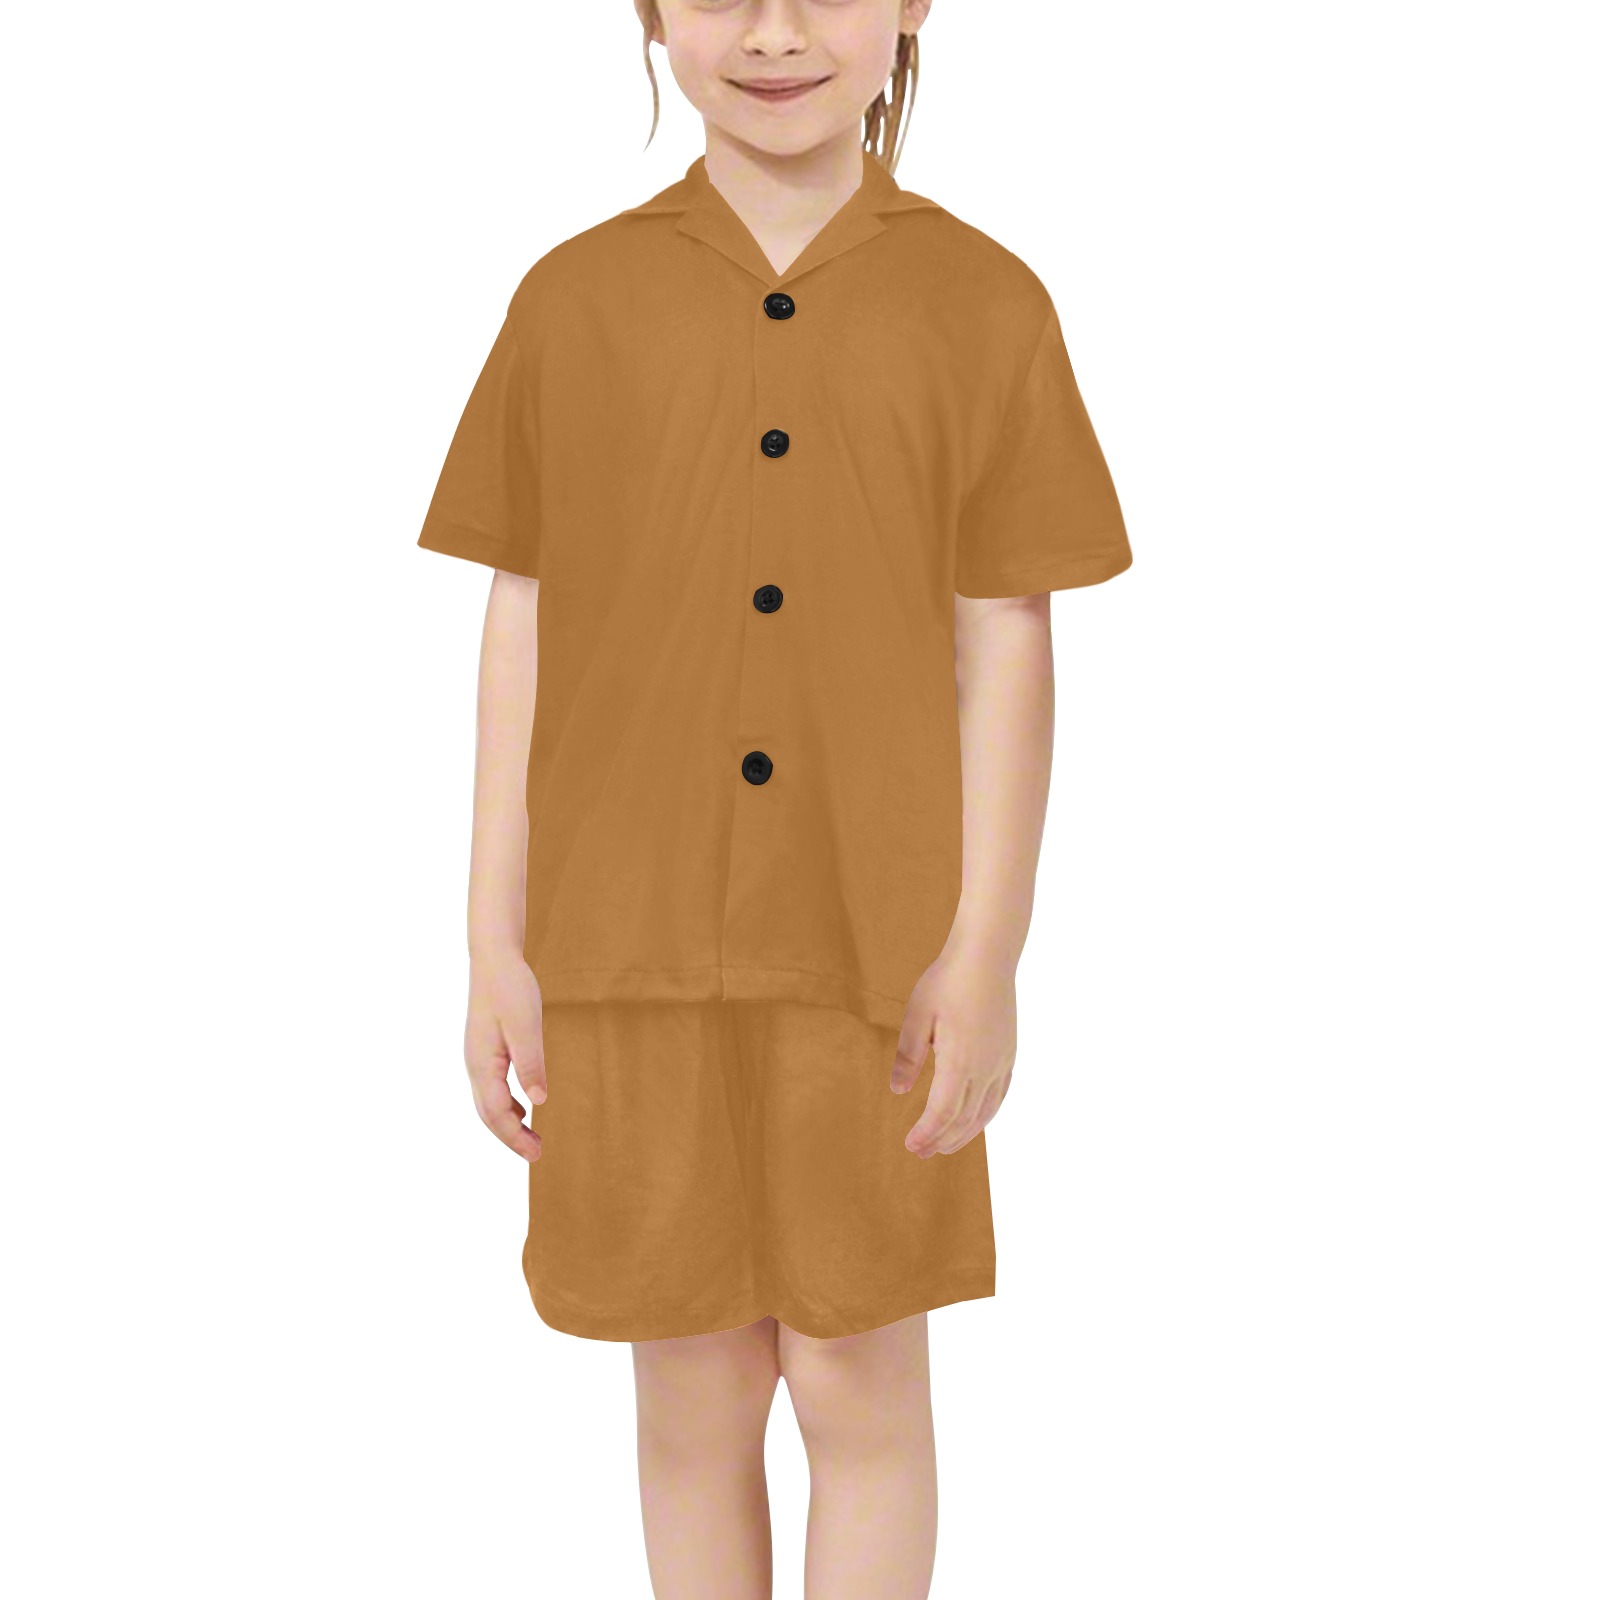 Sudan Brown Little Girls' V-Neck Short Pajama Set